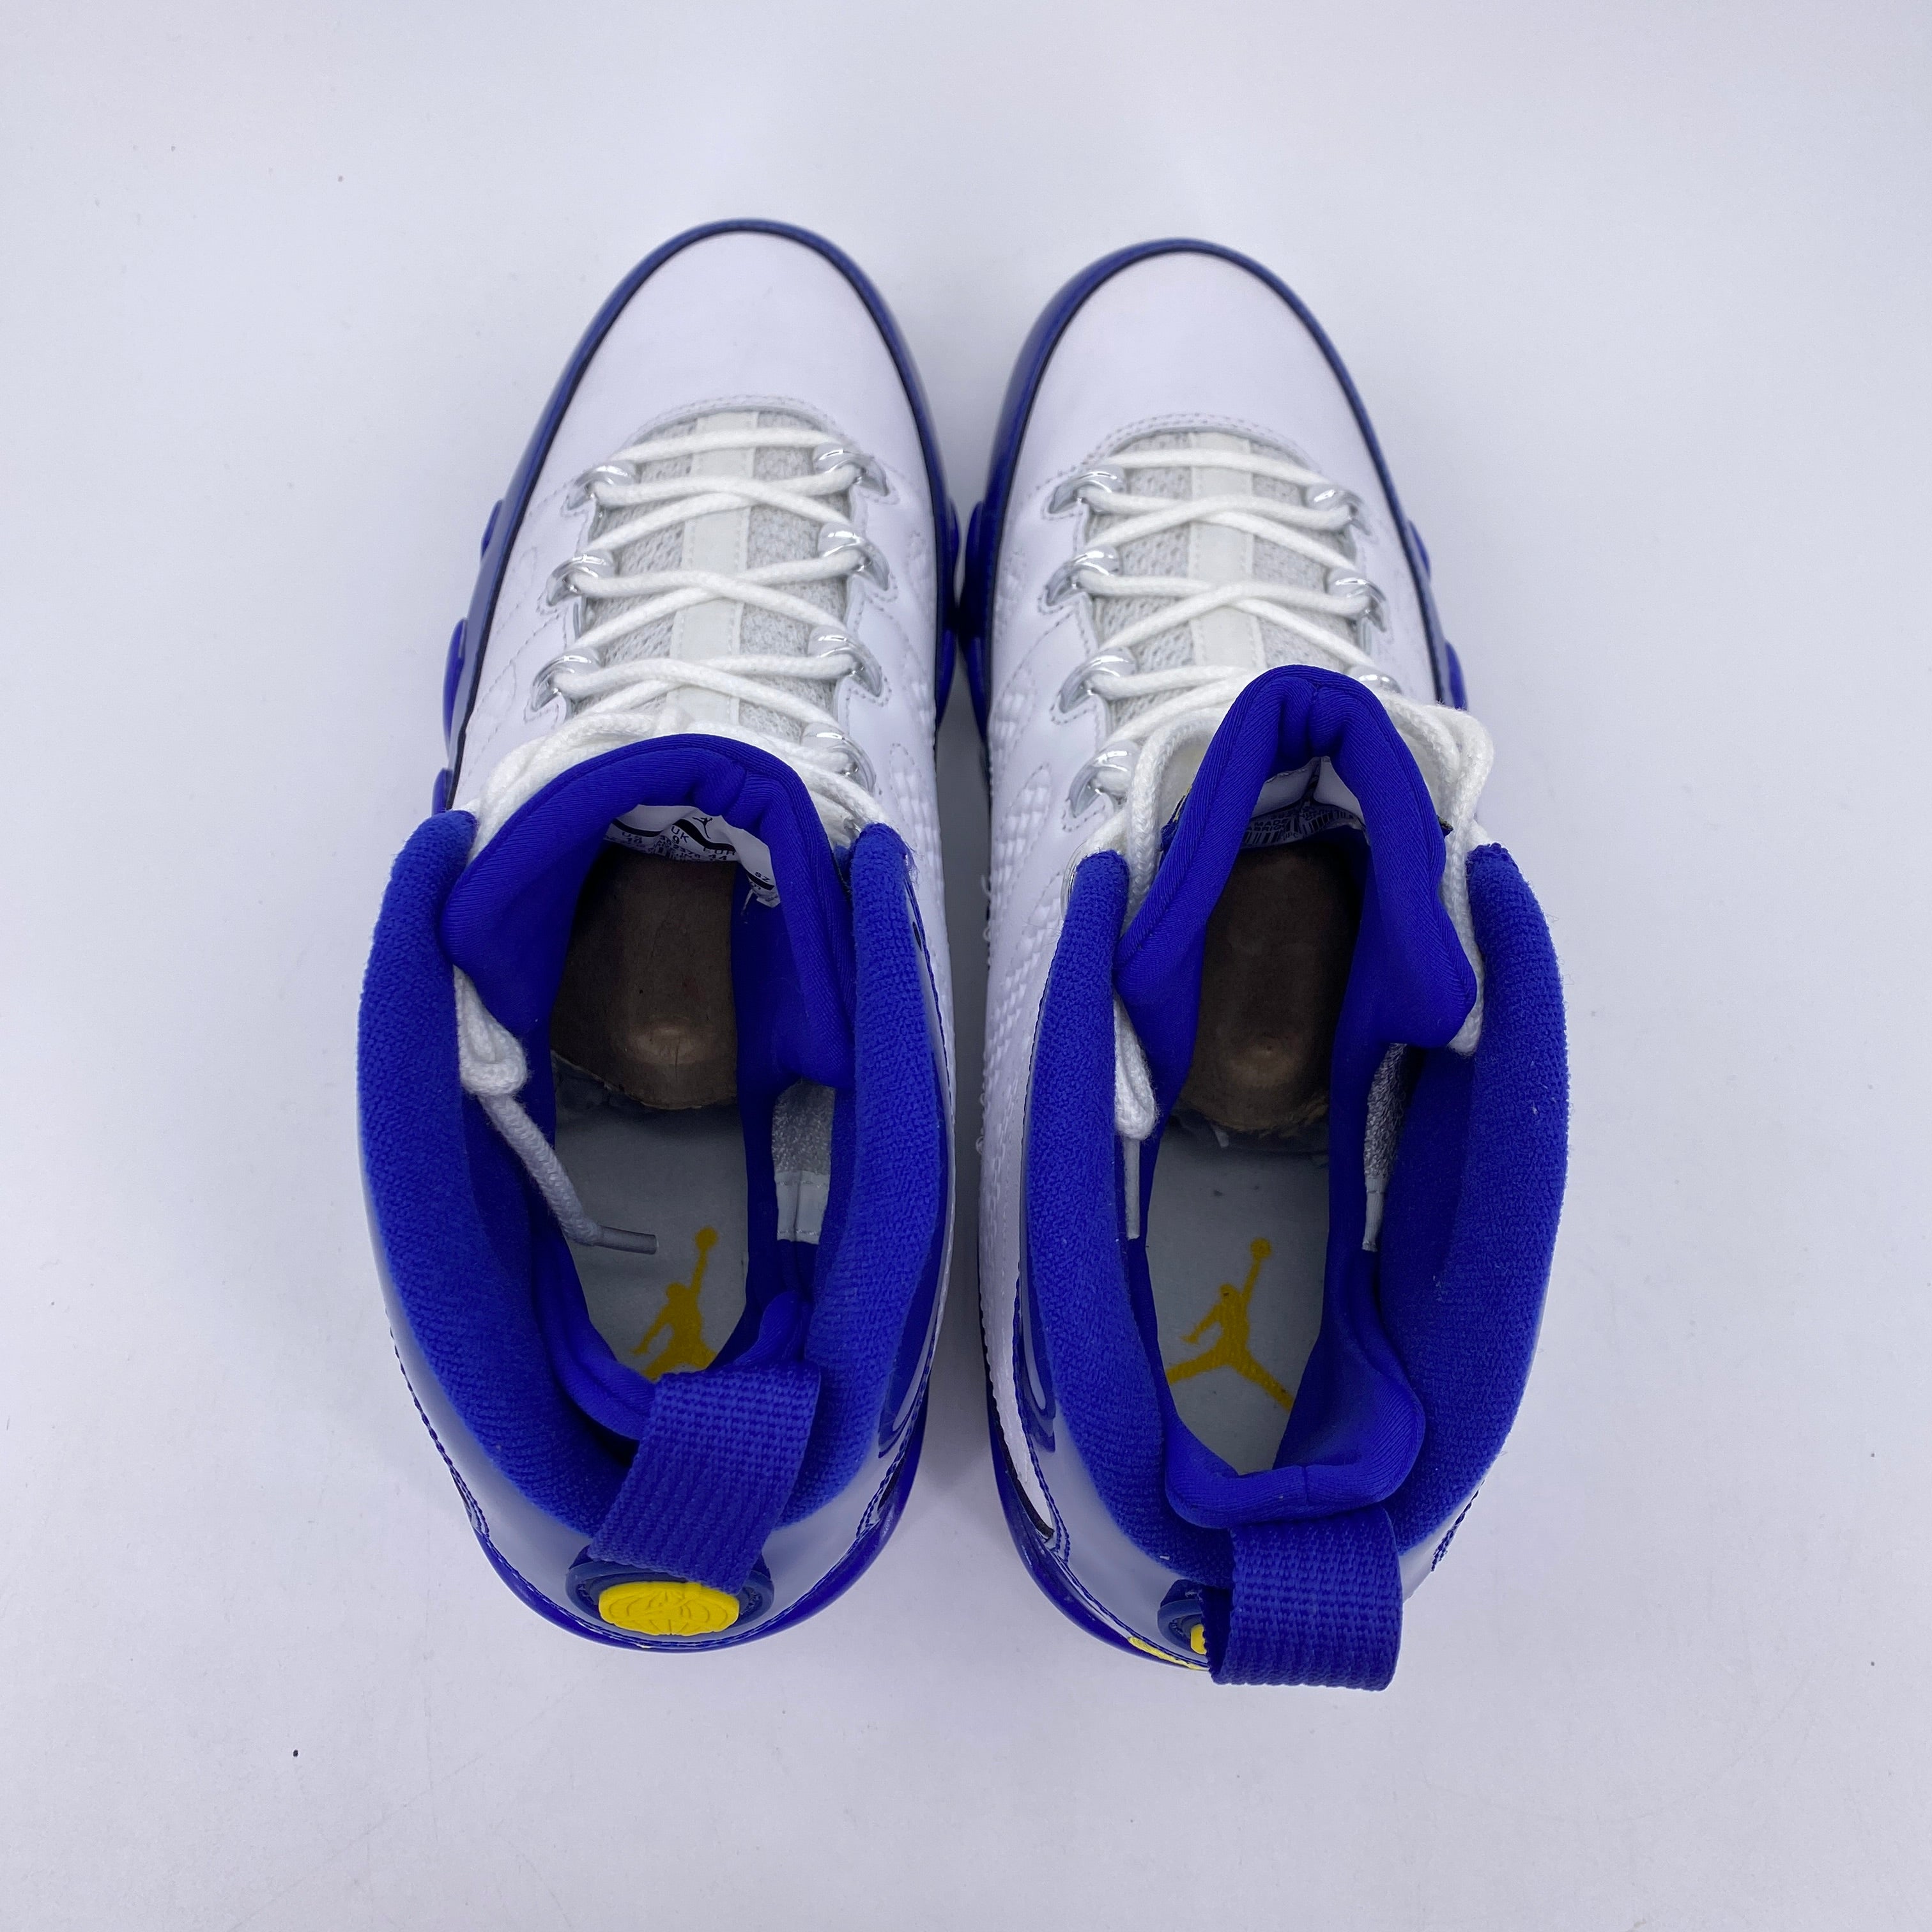 Air Jordan 9 Retro &quot;Kobe Bryant Pe&quot; 2016 New Size 10